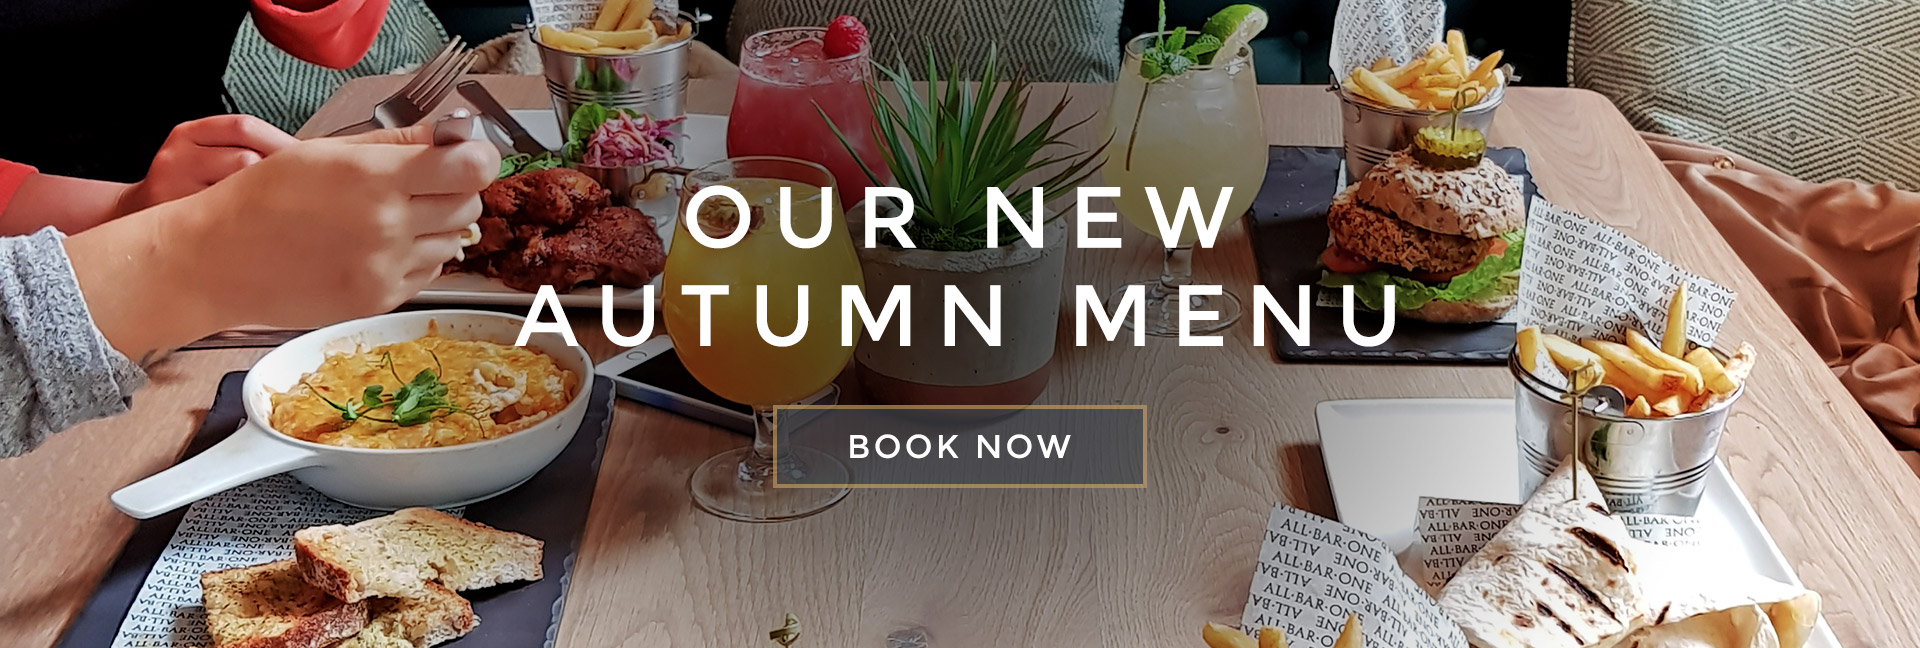 Our new Autumn menu at All Bar One Exchange Edinburgh - Book now